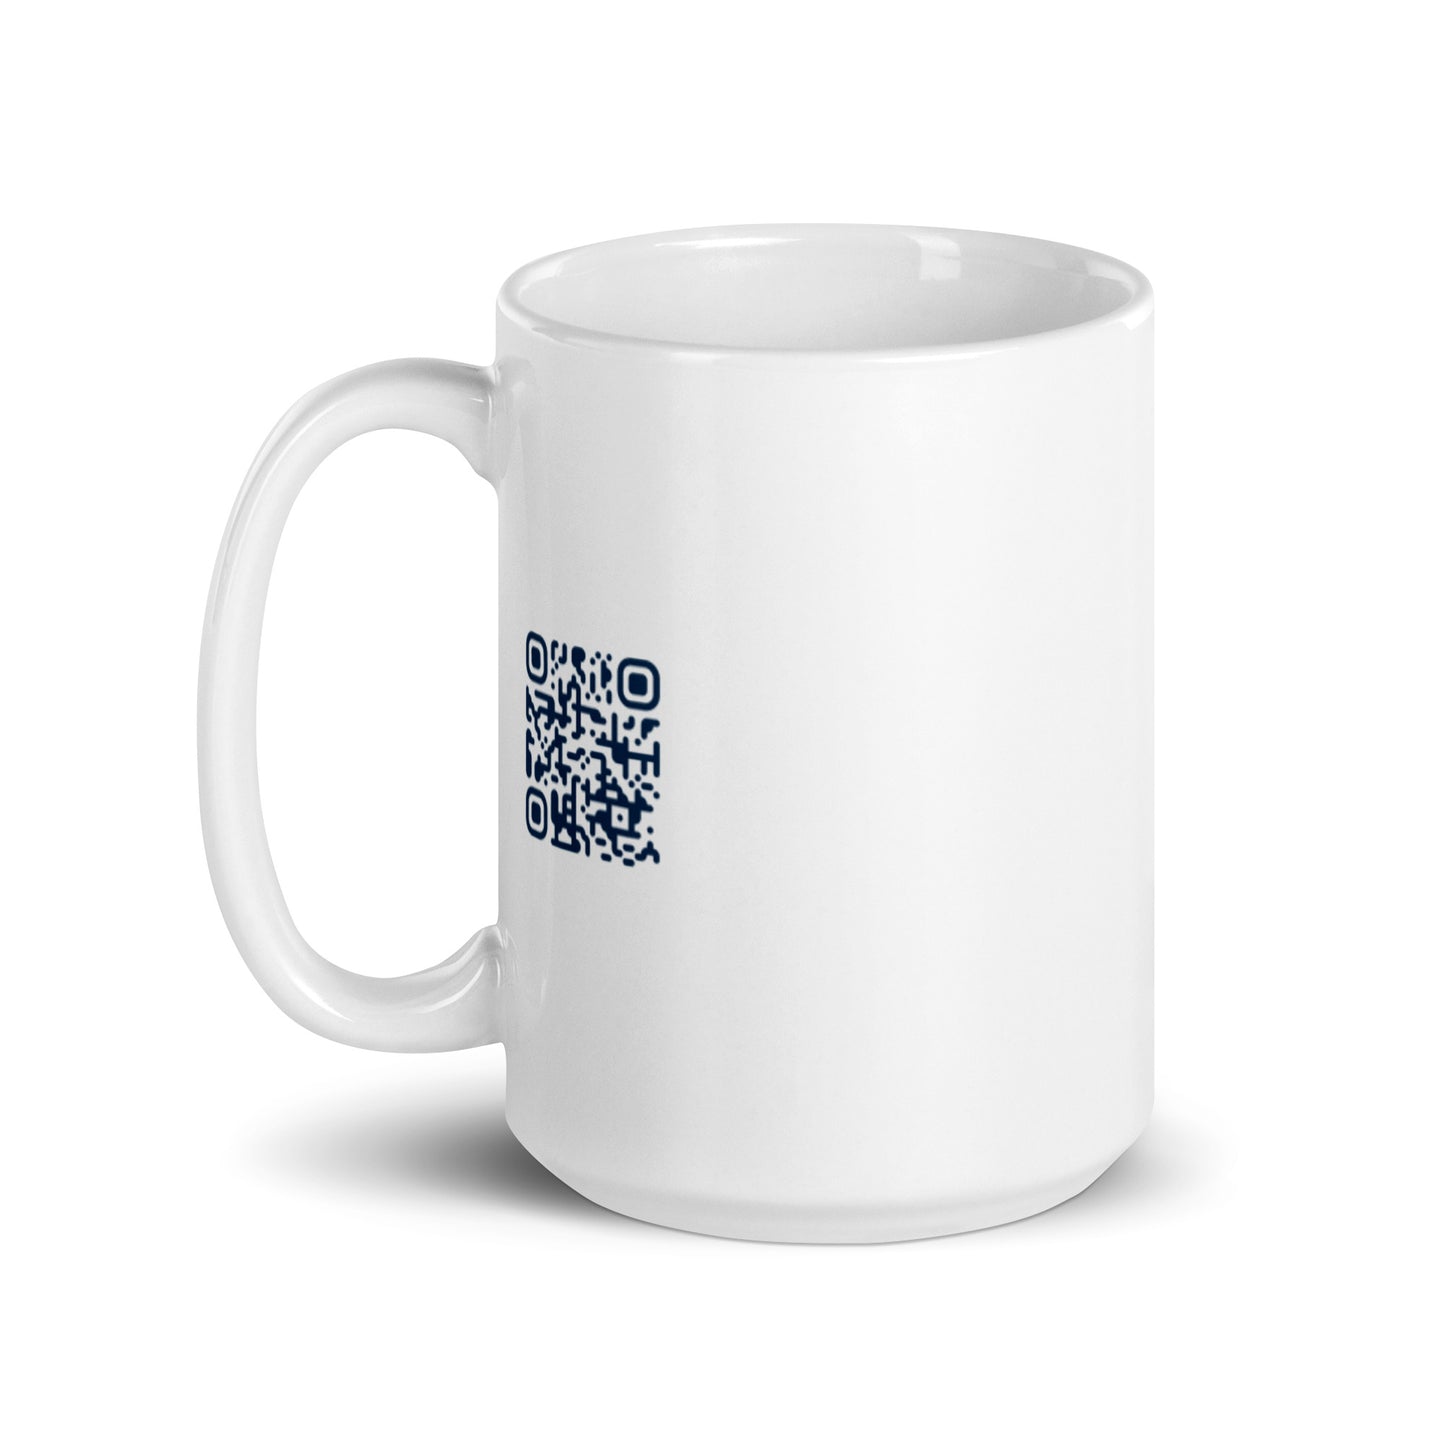 Wizard's Rise - White Coffee Mug